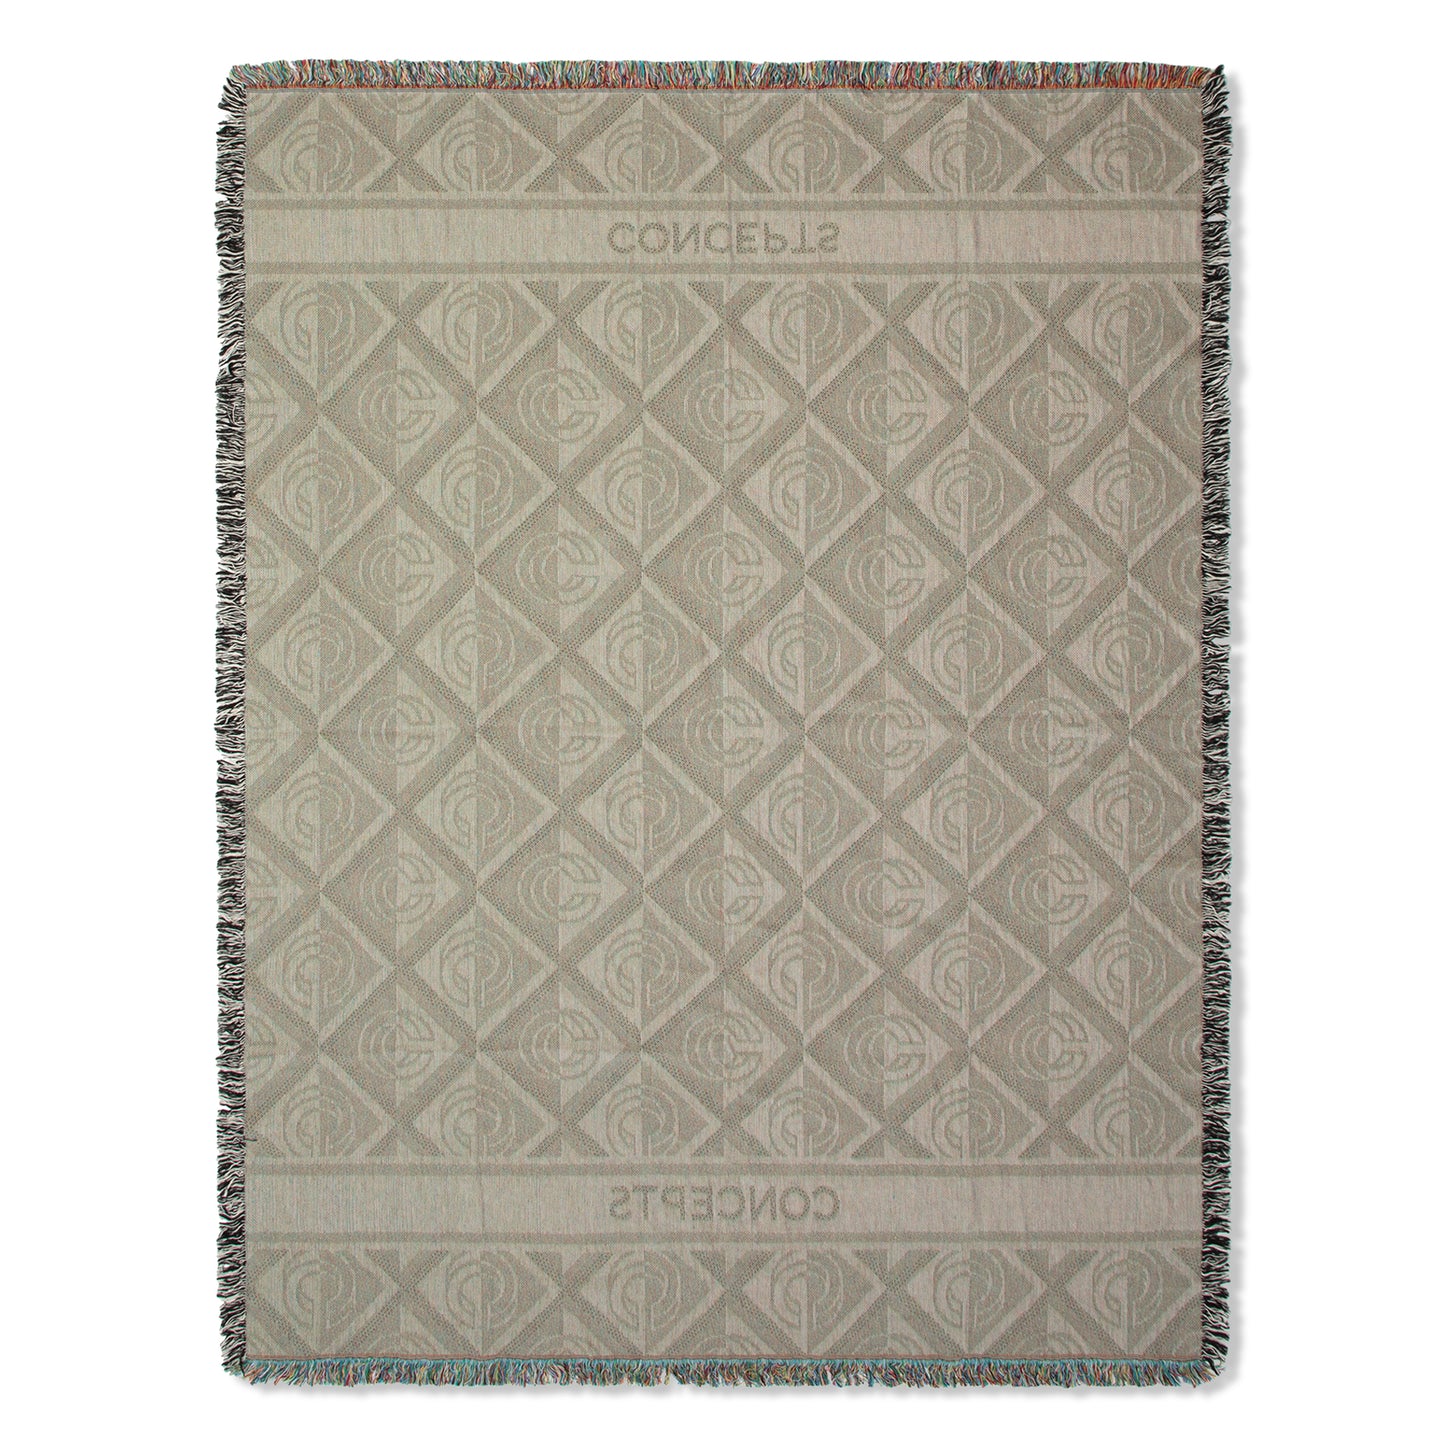 Concepts Almas Tapestry Blanket (Black/Grey)